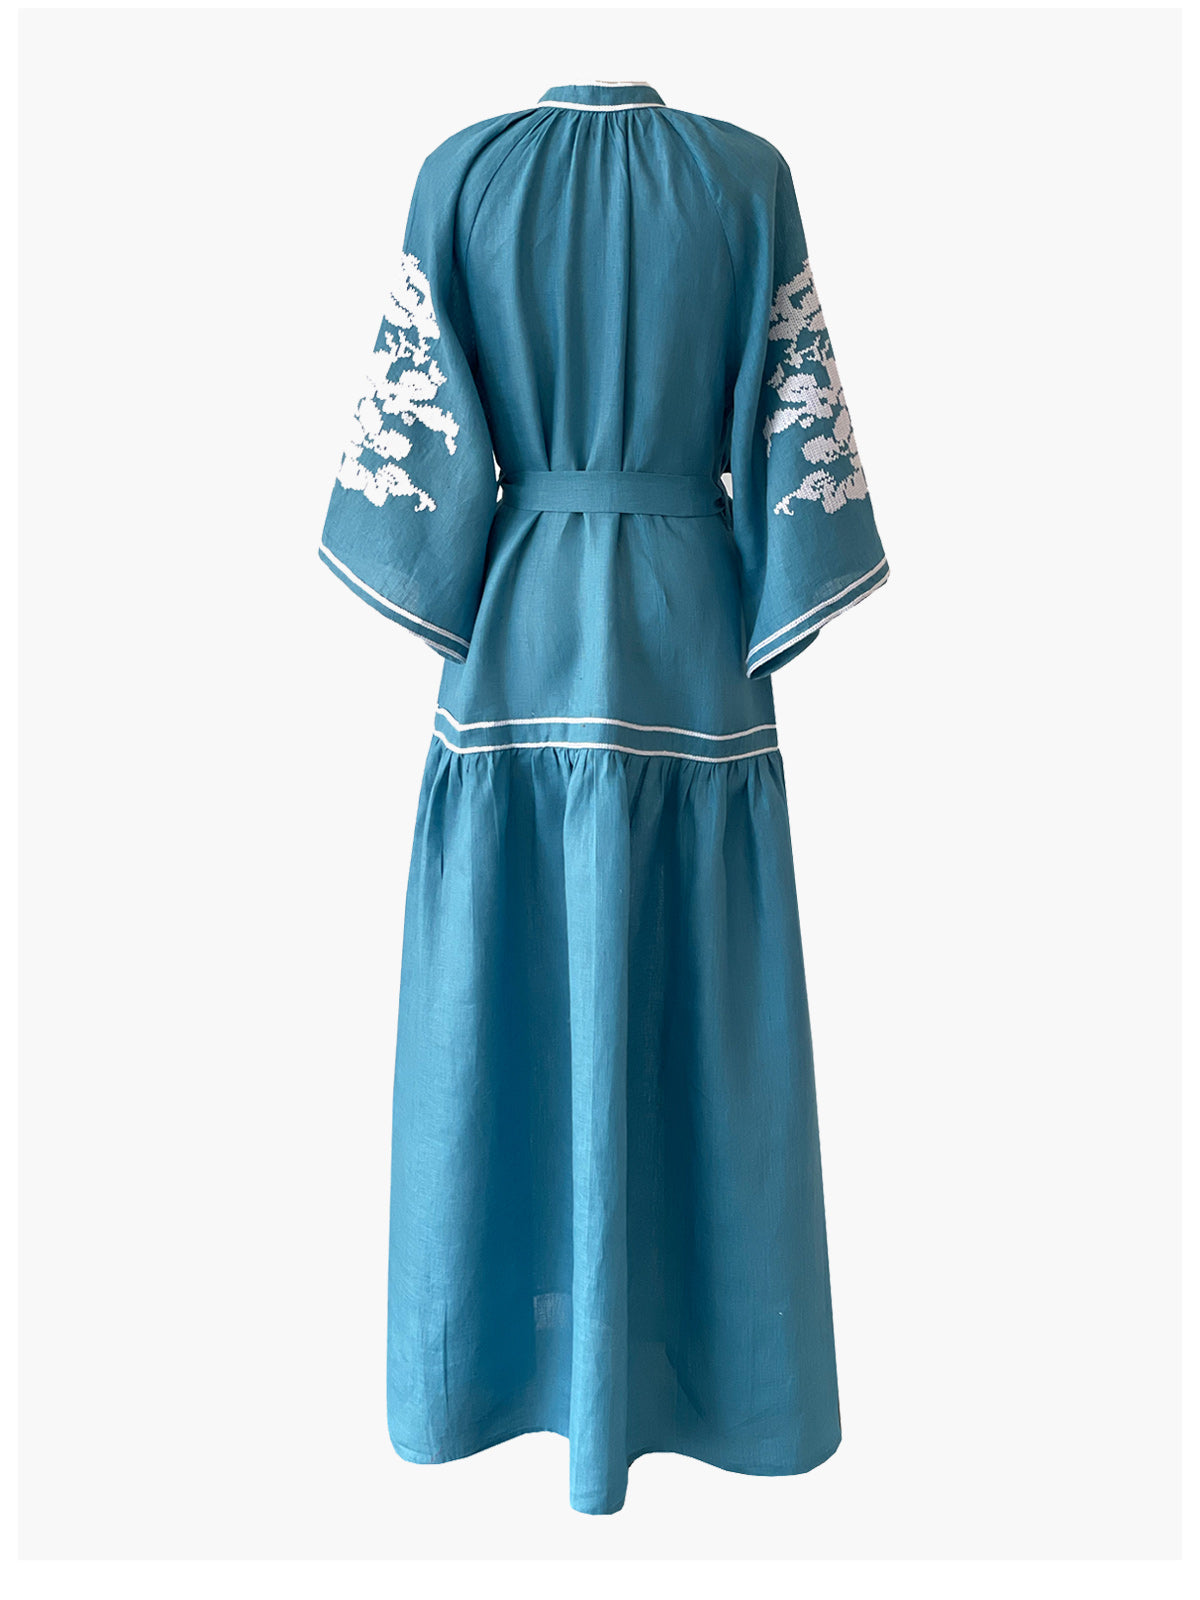 Swan Dress | Turquoise